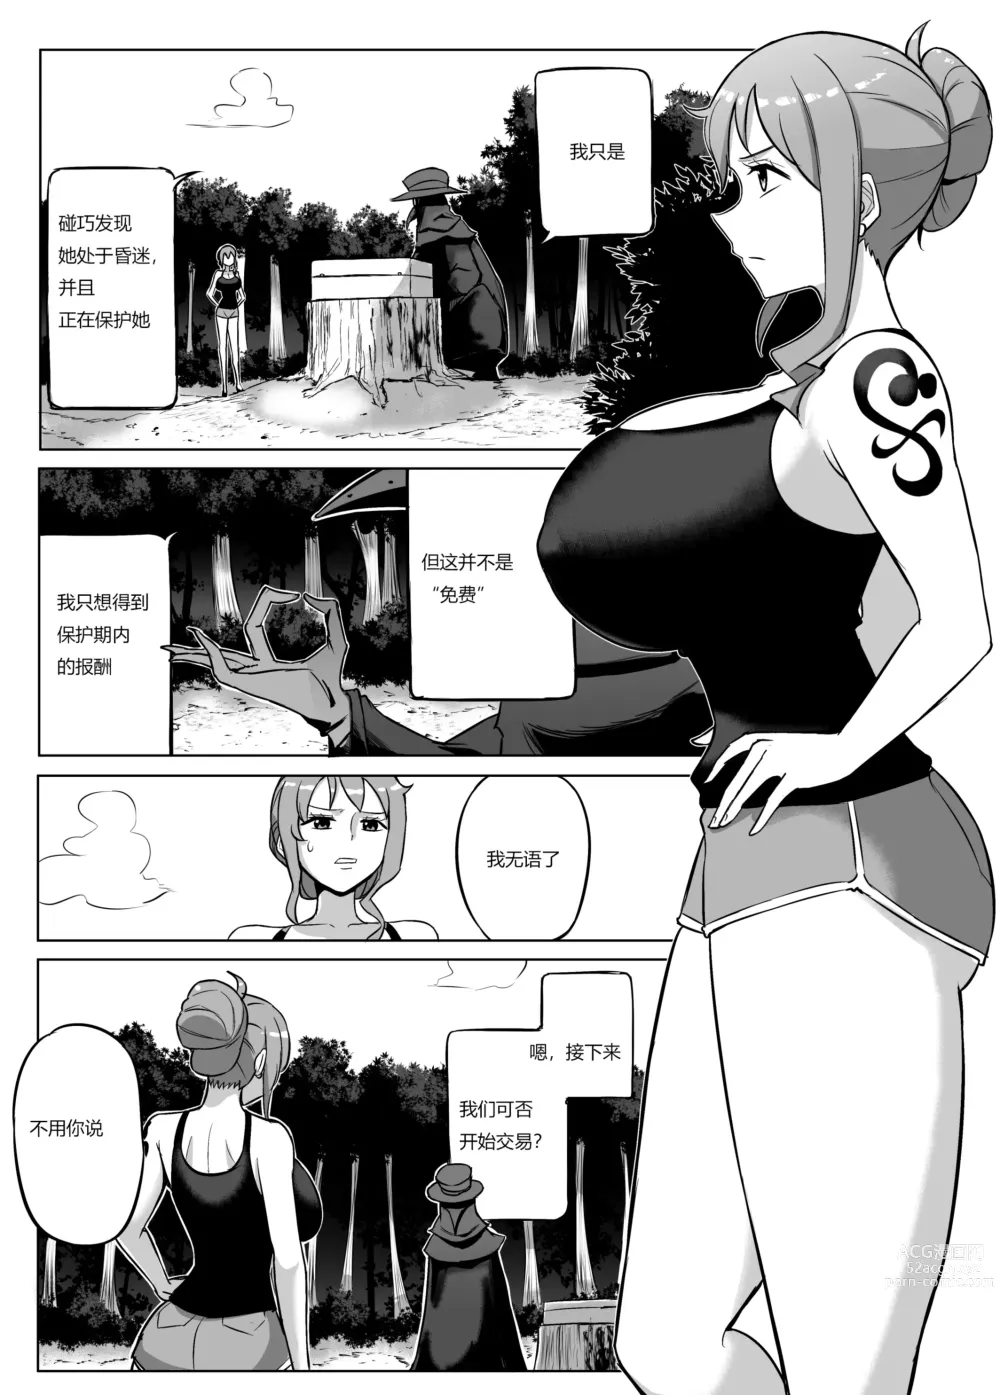 Page 3 of manga Trade